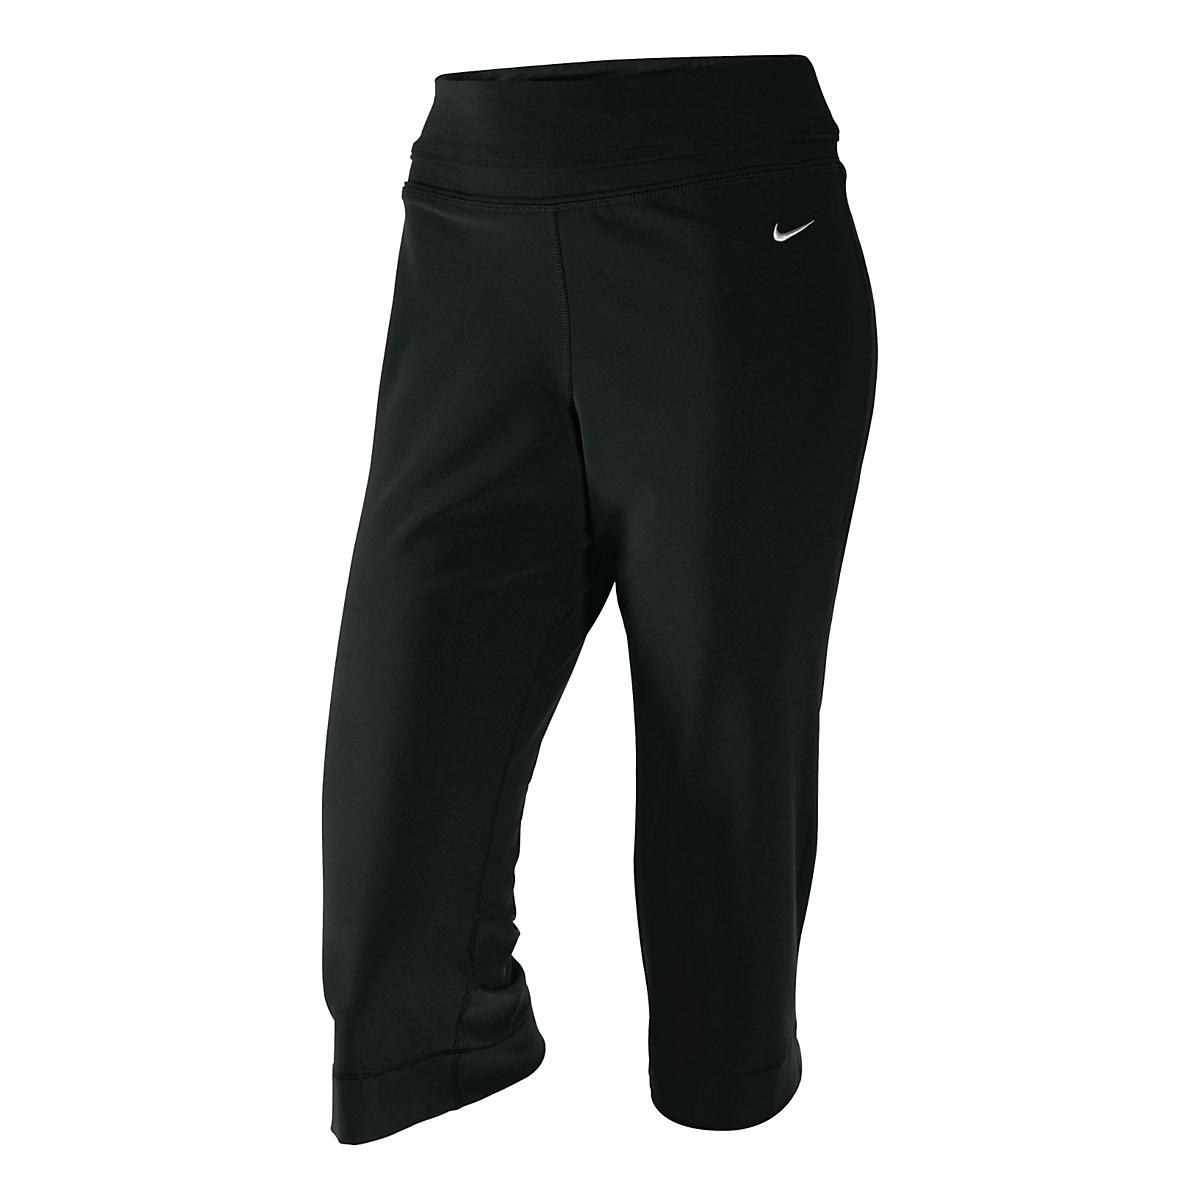 Womens Nike Be Strong Capri Pants at Road Runner Sports